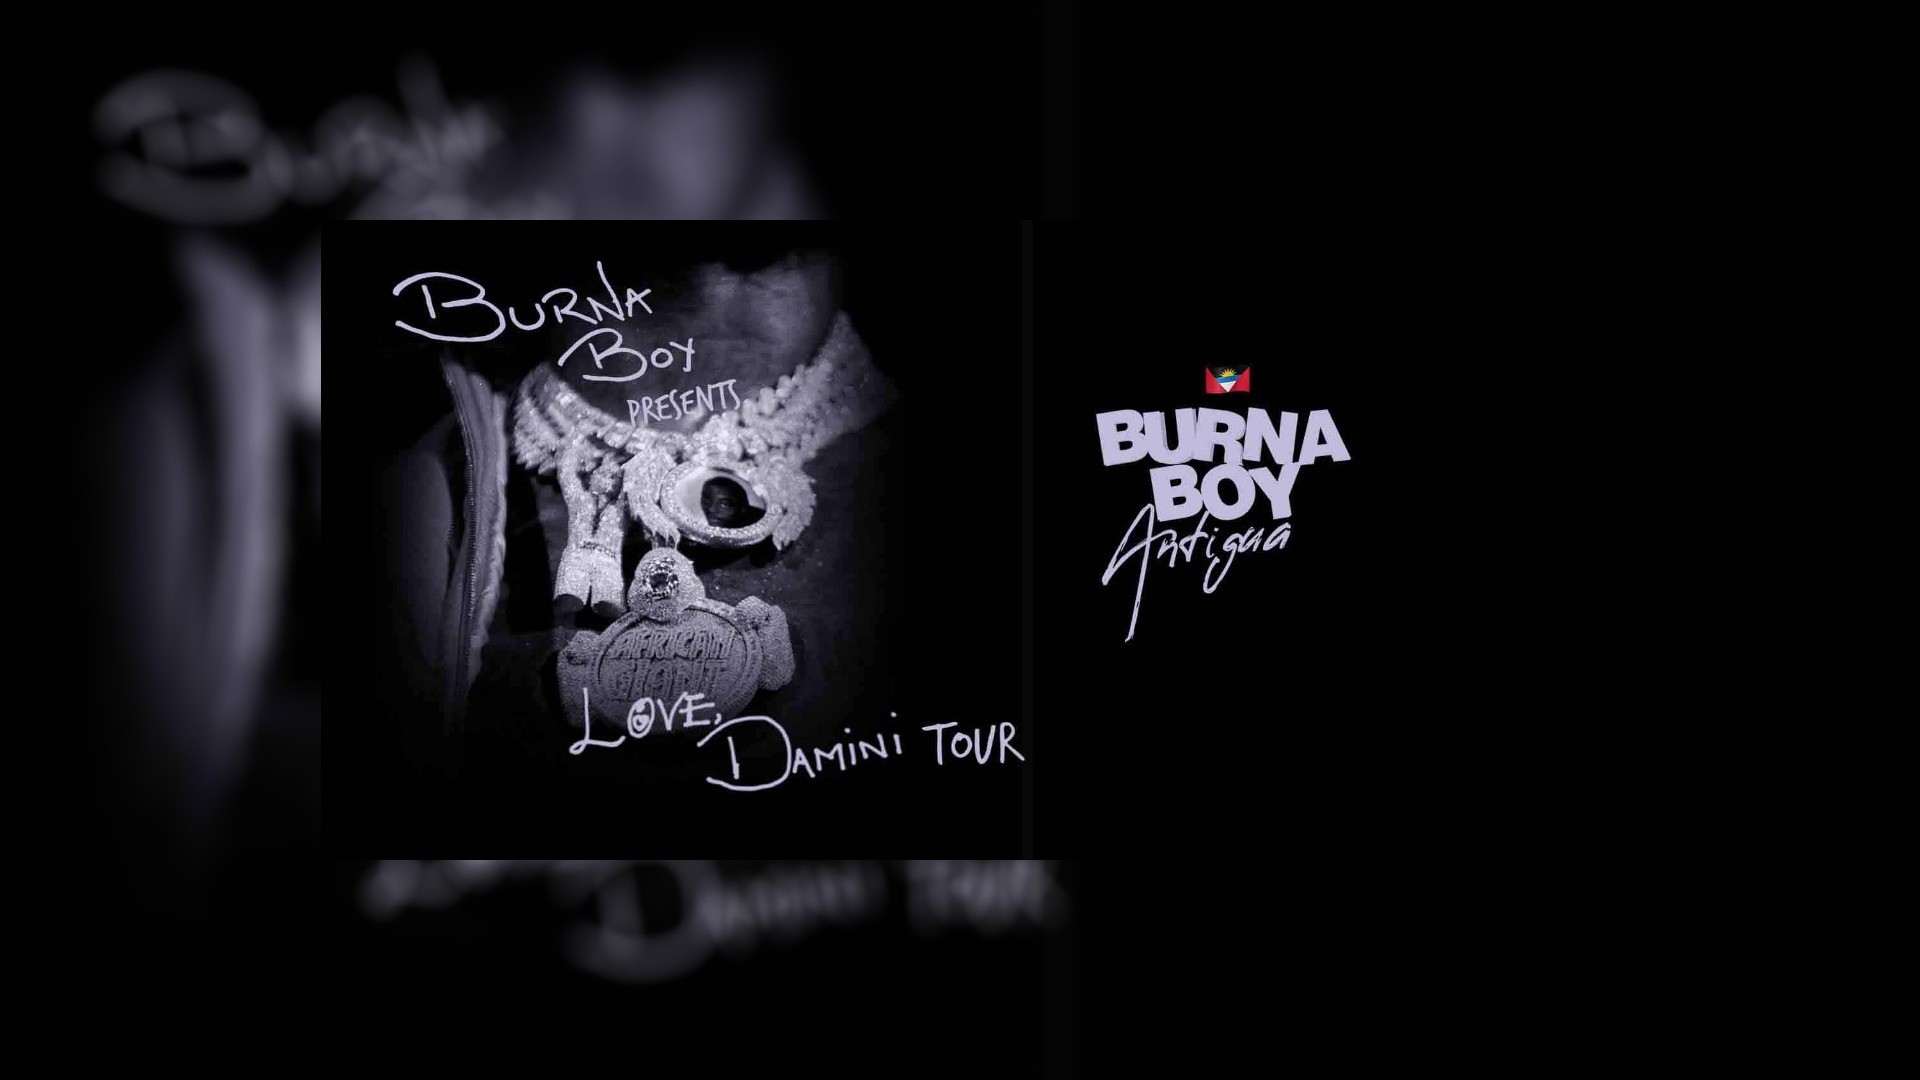 Burna Boy Love Damini Tour Antigua